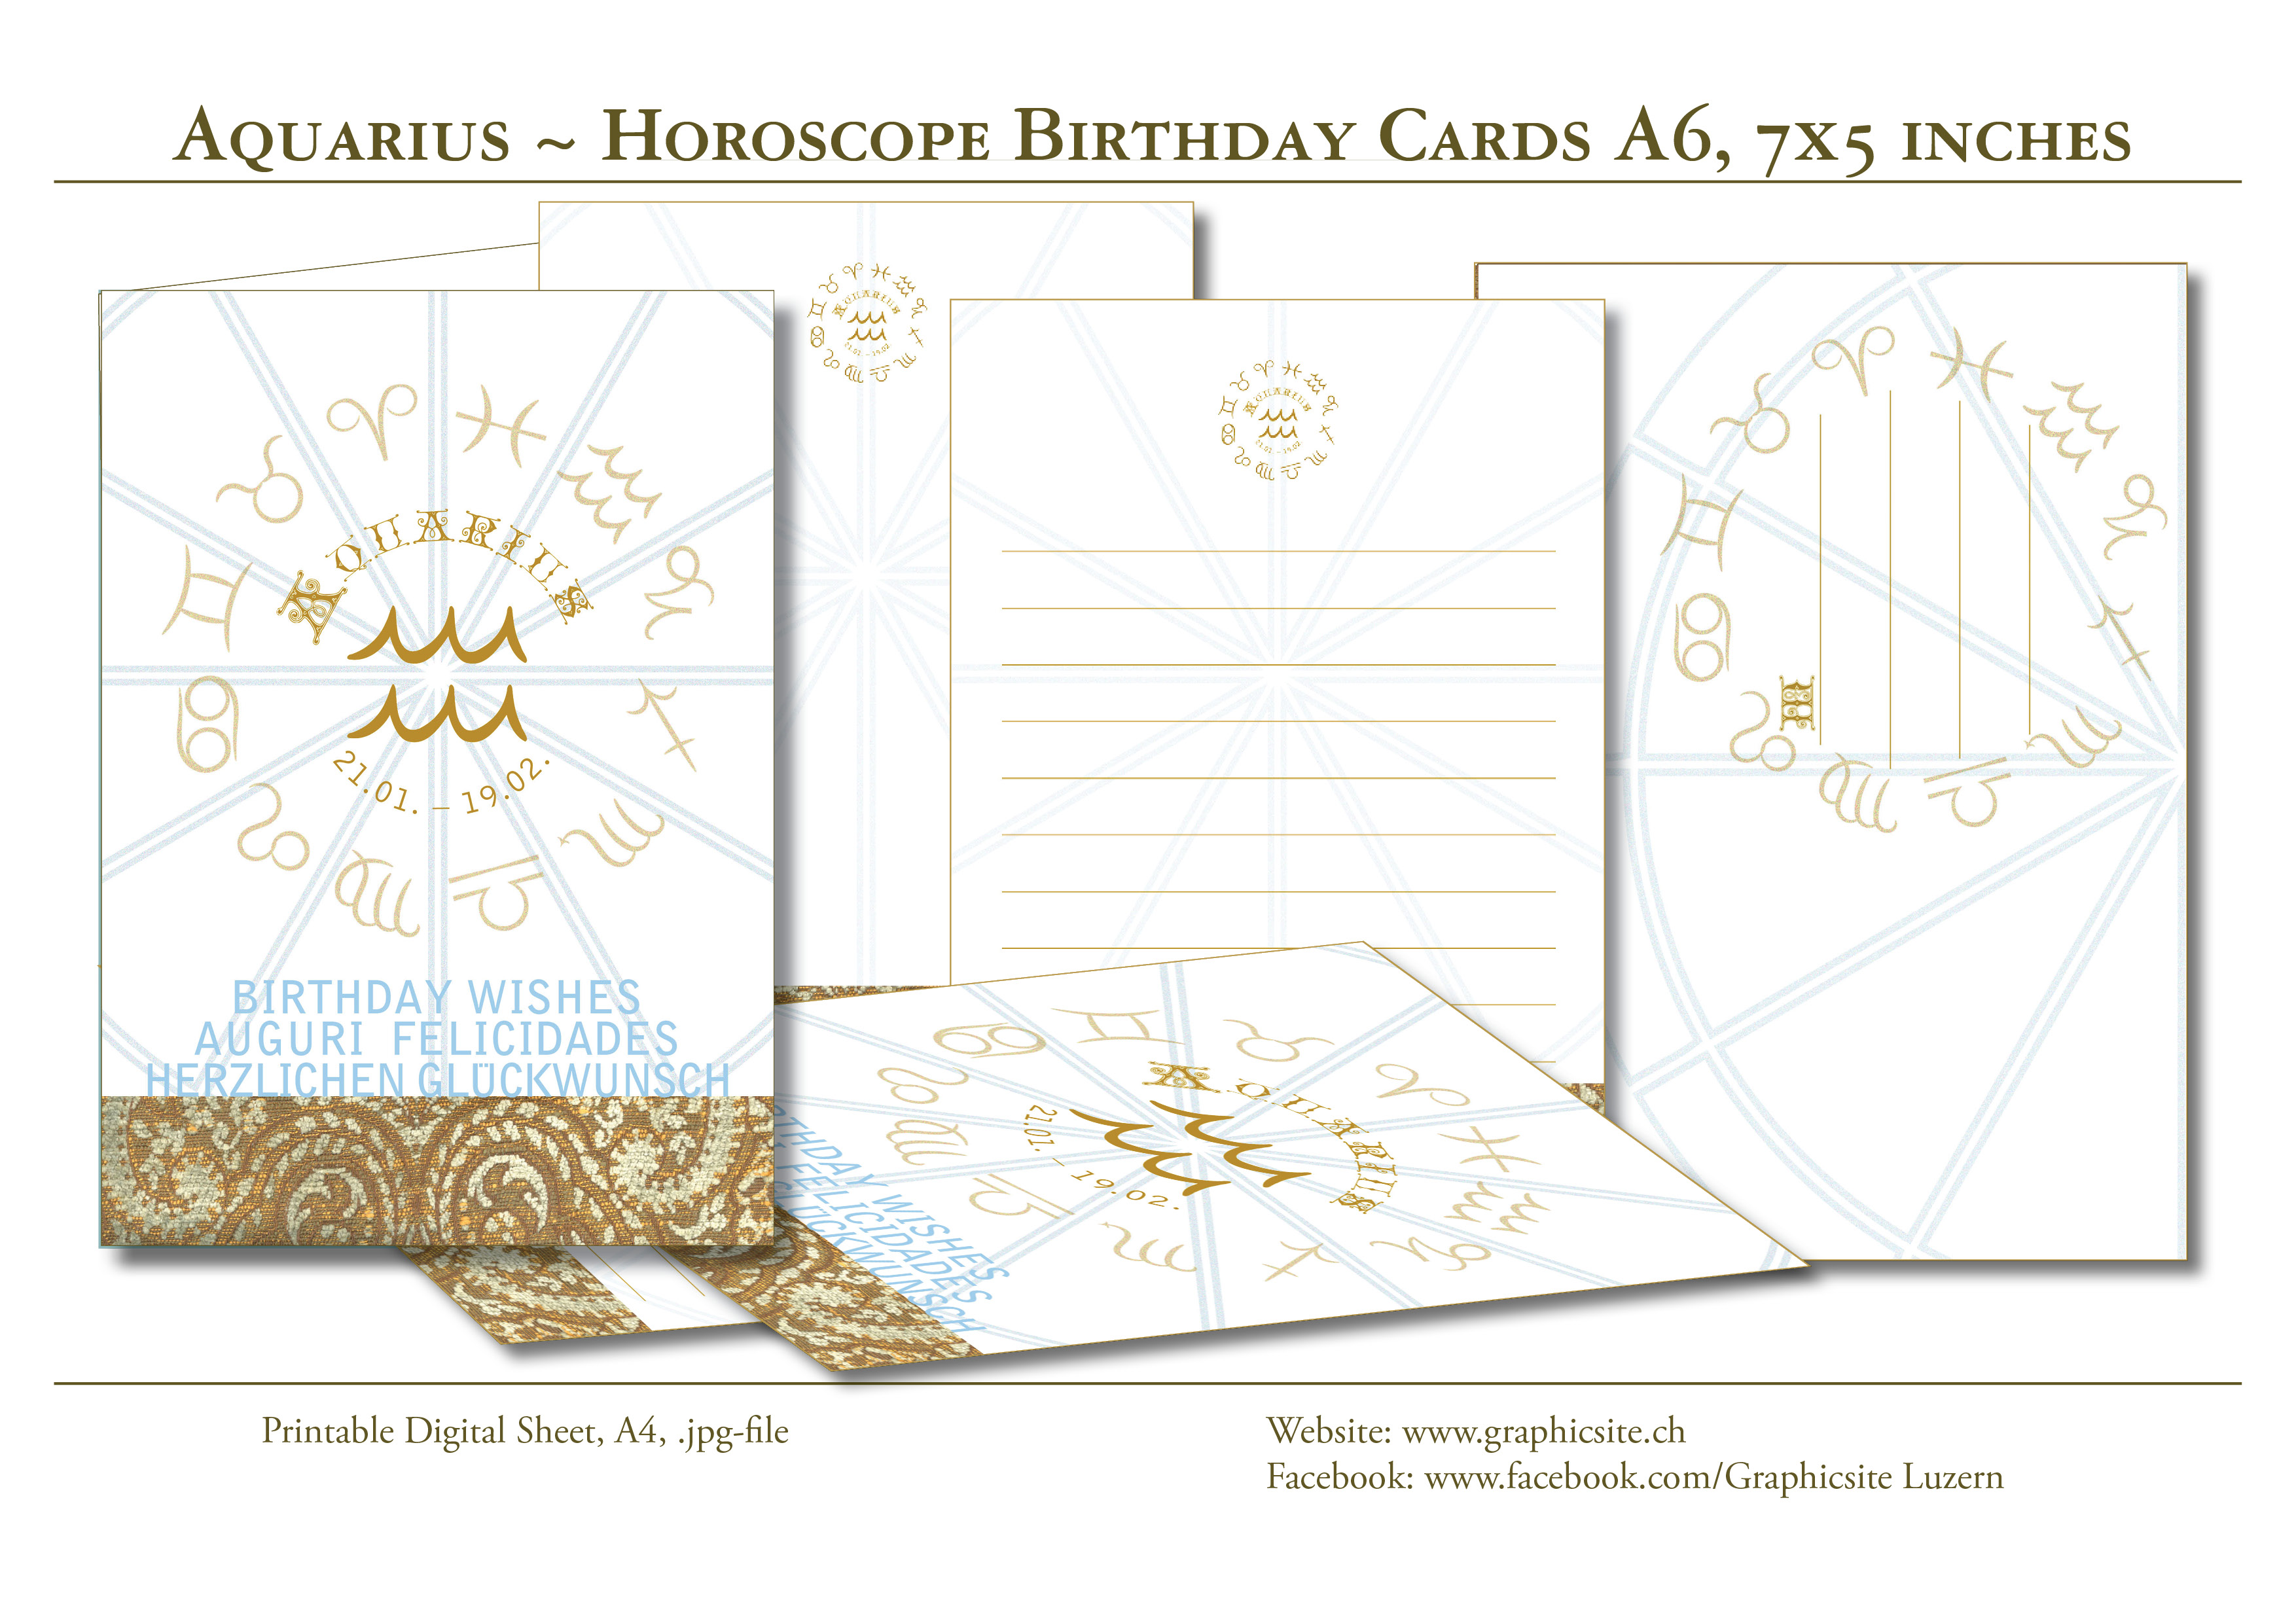 Printable Digital Sheets - Birthday Card Collection - Horoscope - Zodiac - Aquarius A6 - GraphicDesign, Luzern